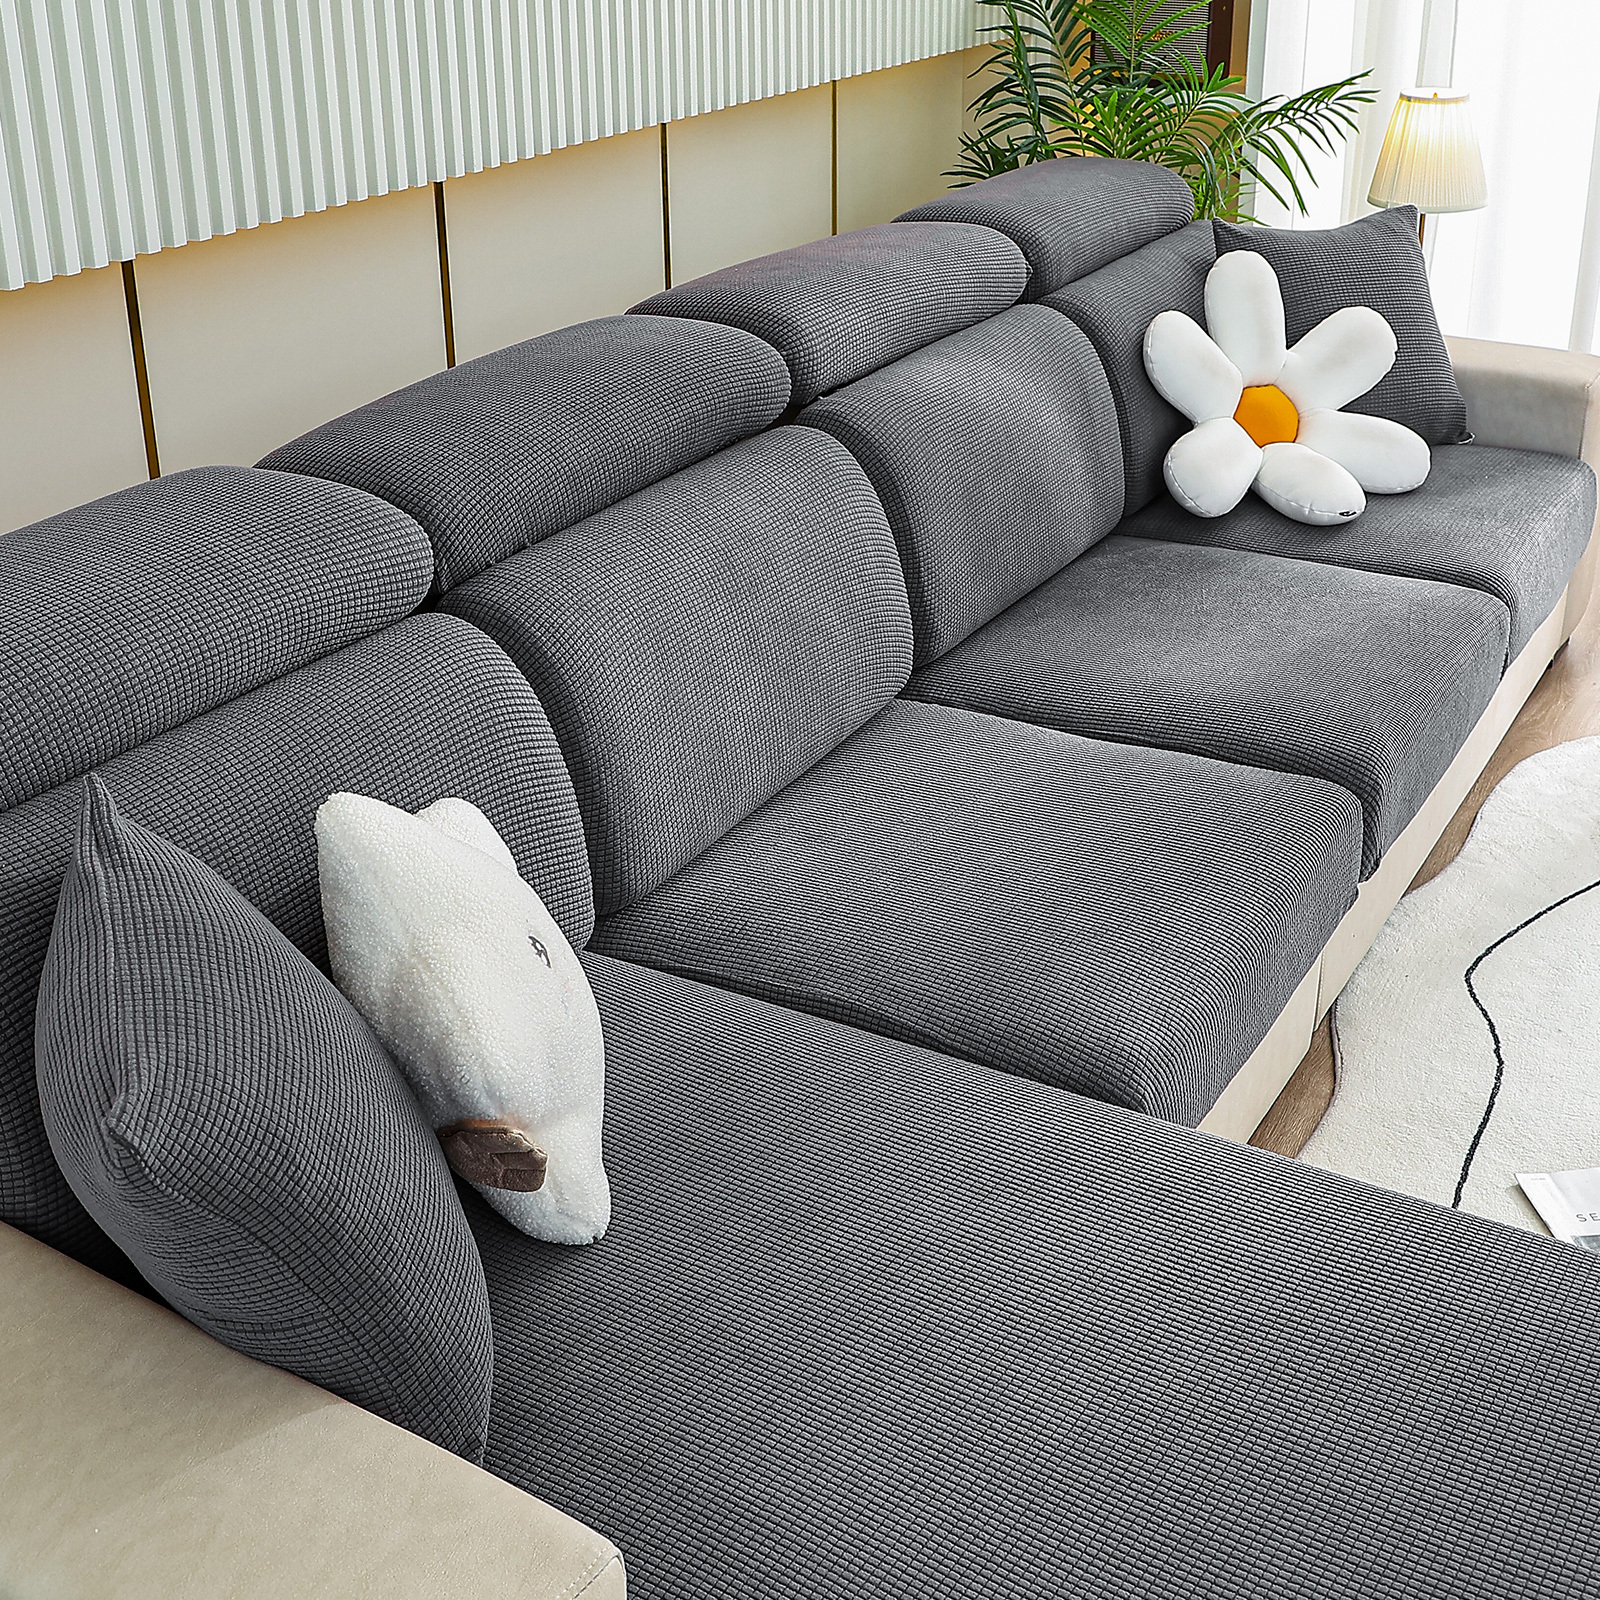 1 pezzo Fodera per divano in poliestere e fodera per cuscino senza  imbottitura, fodera per divano elasticizzata jacquard geometrica moderna per  casa